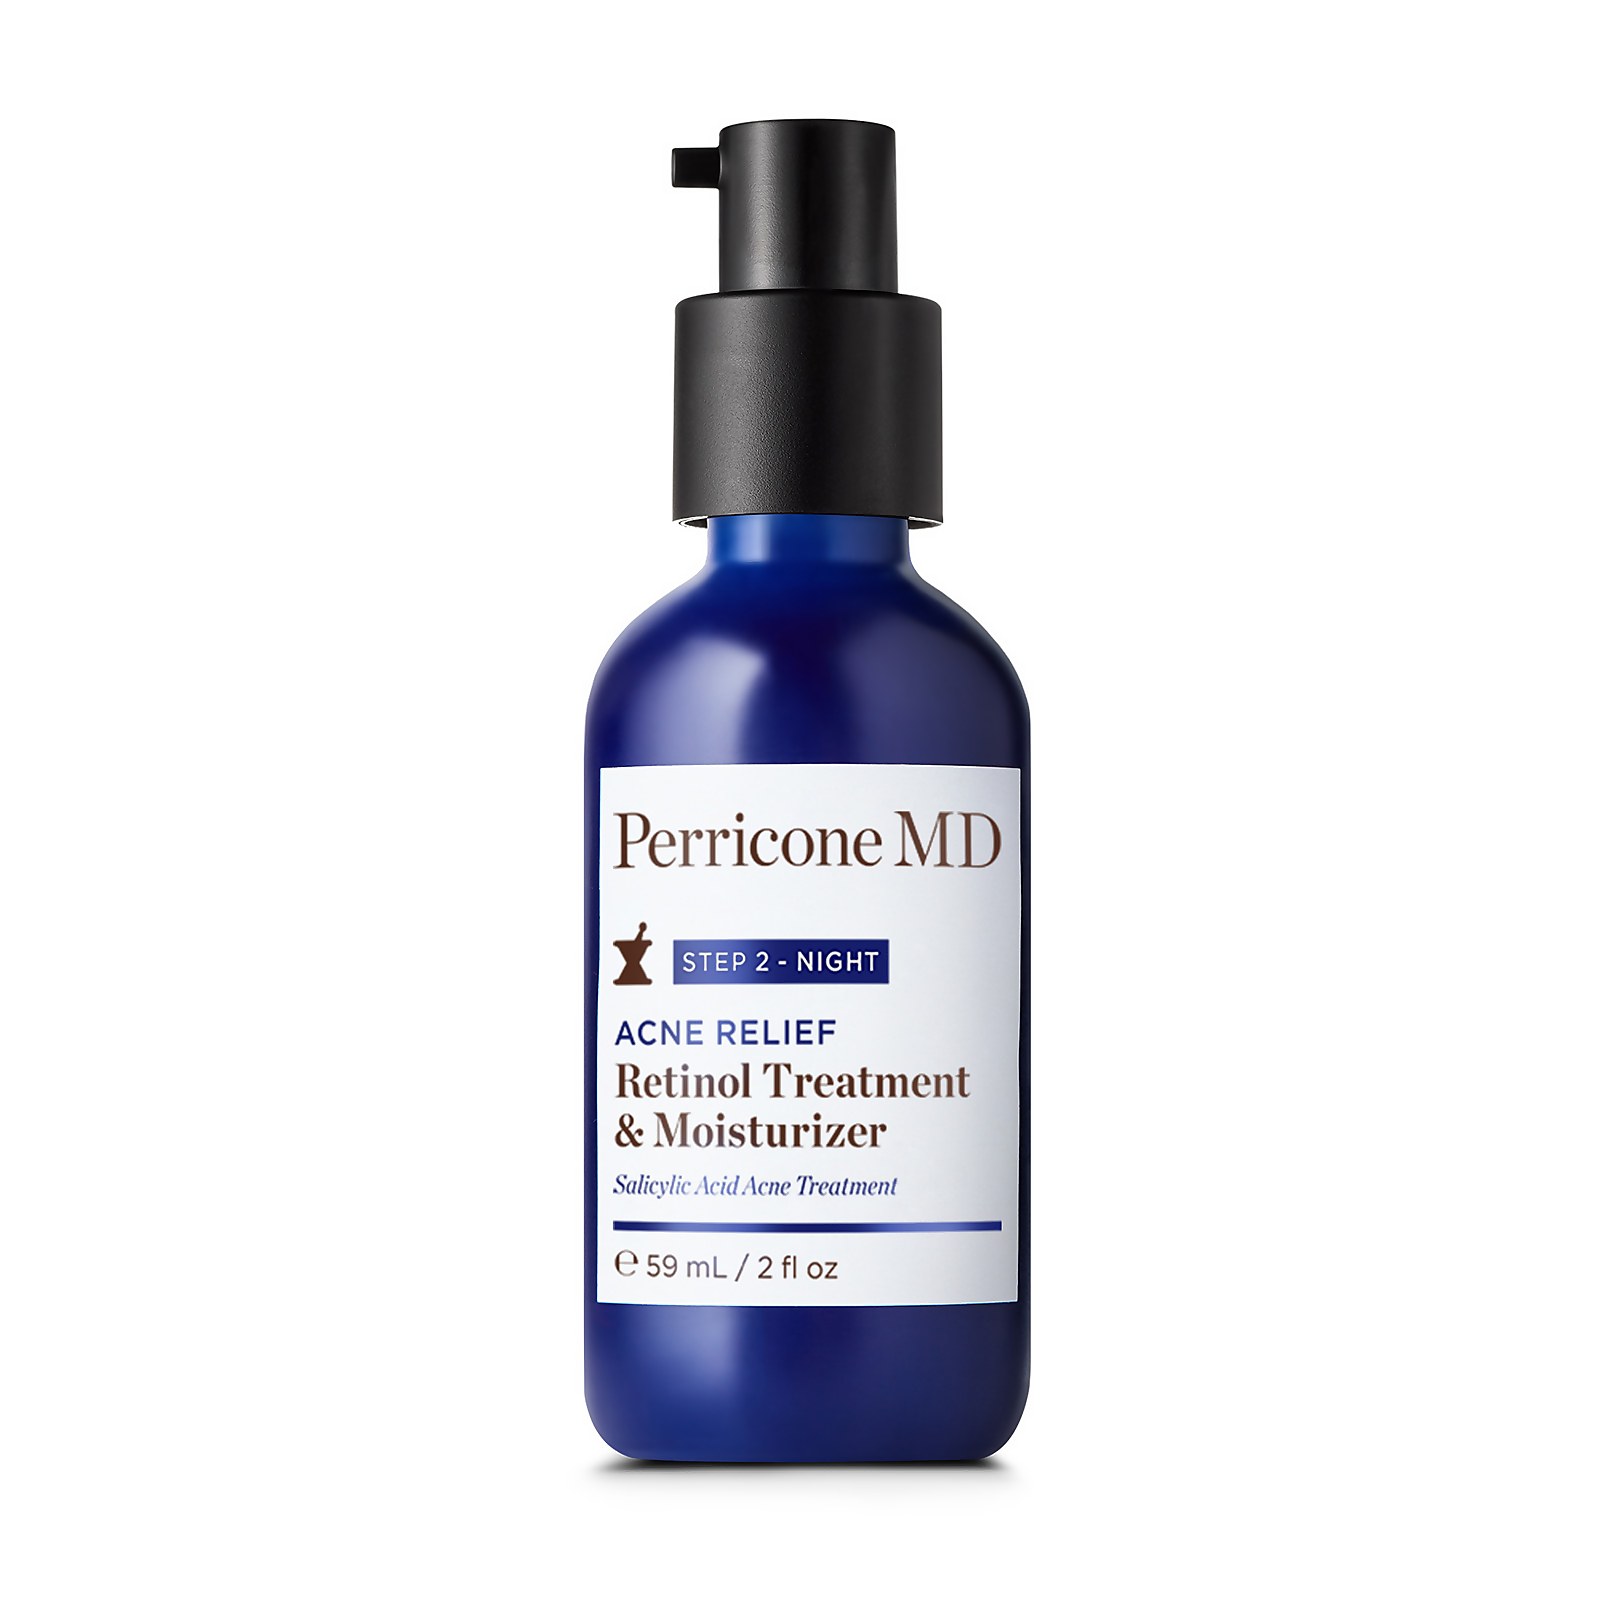 Perricone Md Acne Relief Retinol Treatment & Moisturizer